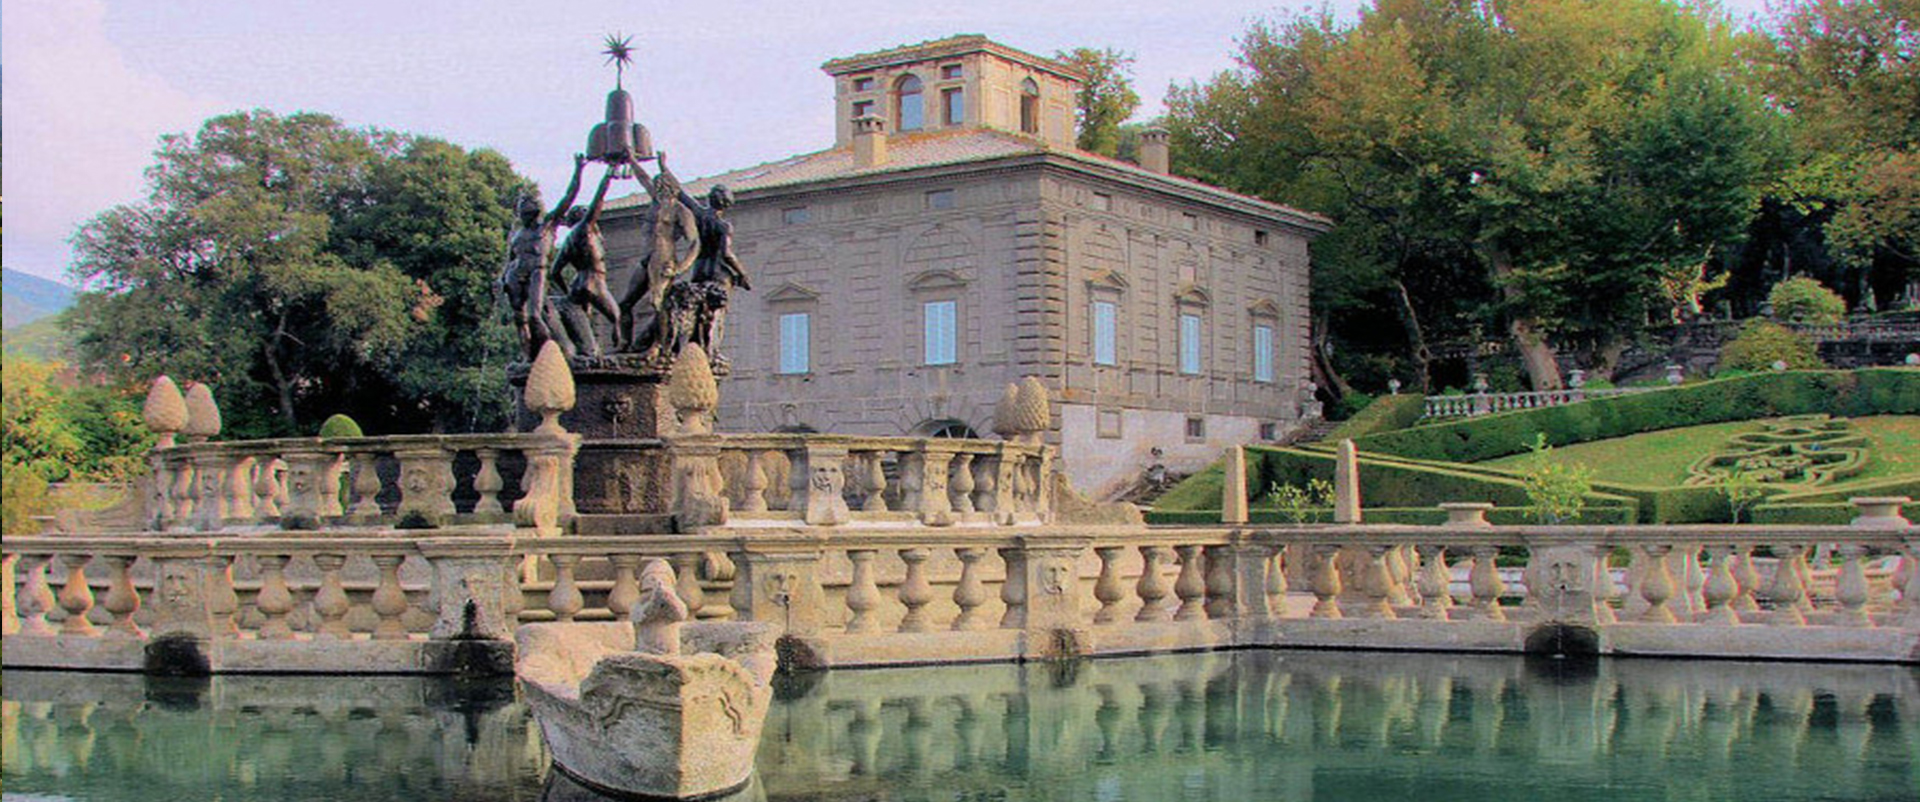 Villa Lante - VT - La Fontana dei Mori e la palazzina Montalto